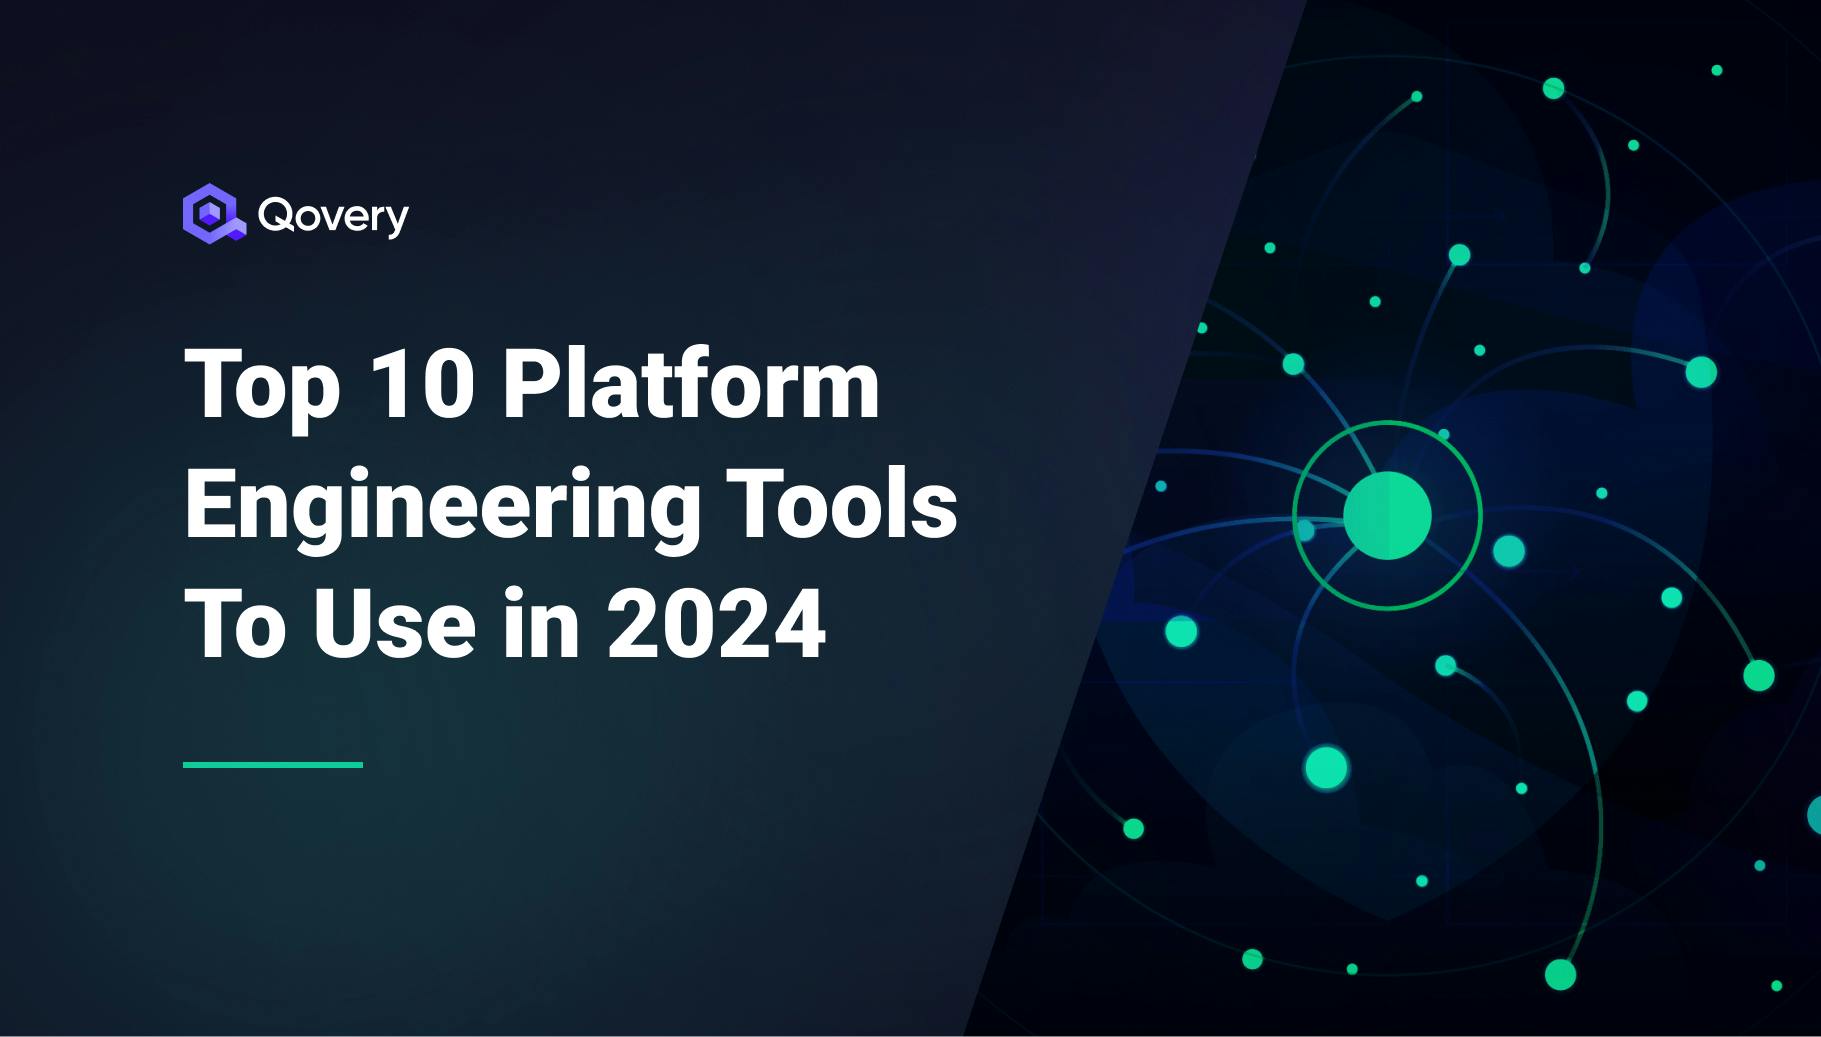 Top 10 Platform Engineering Tools You Should Consider in 2024 - Qovery